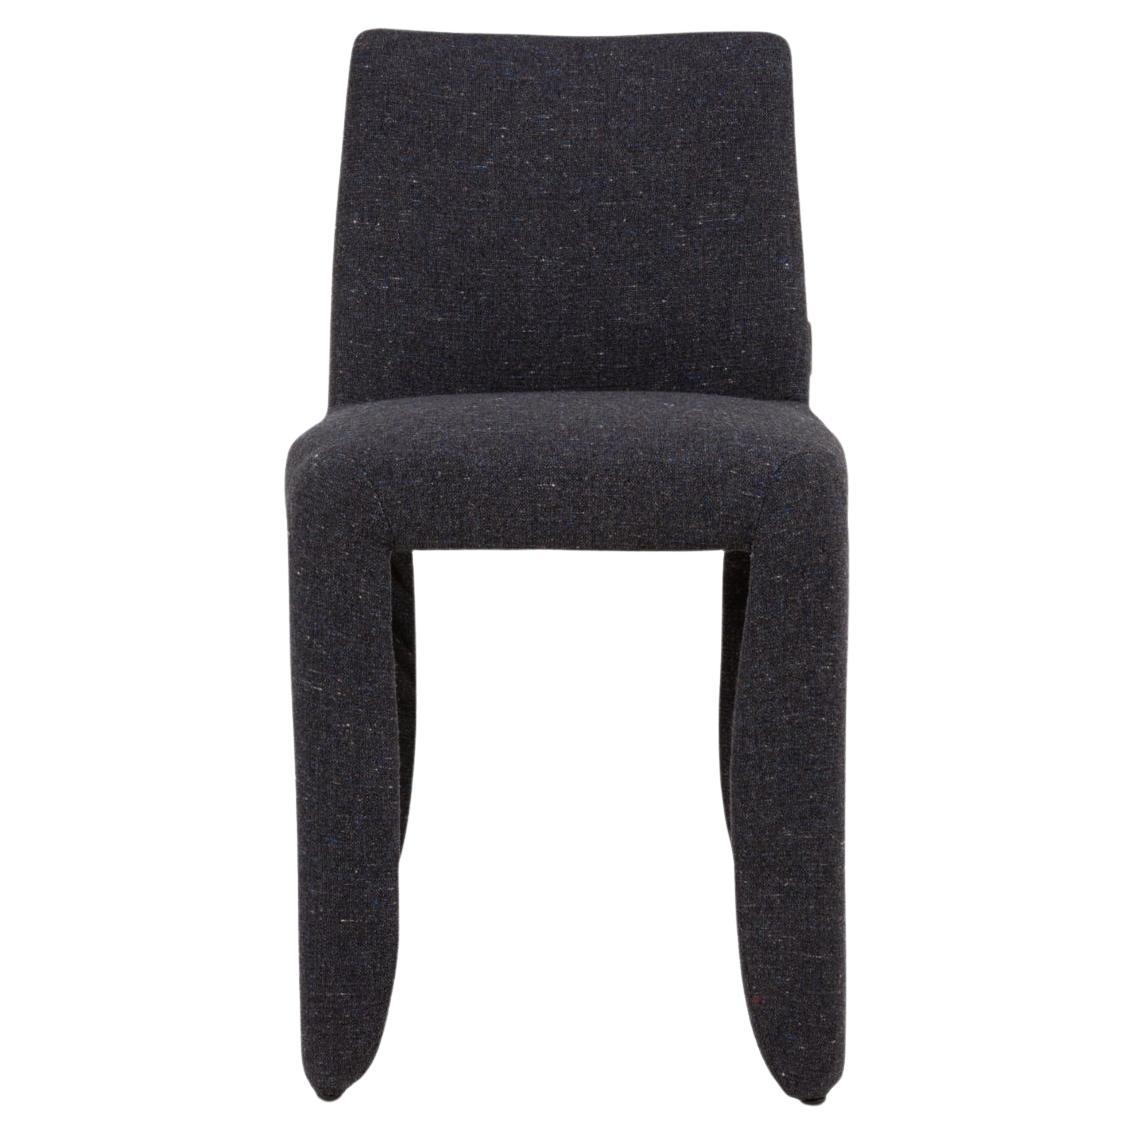 Moooi Monster Naked Chair in Solis, Dawn Dark Grey Upholstery